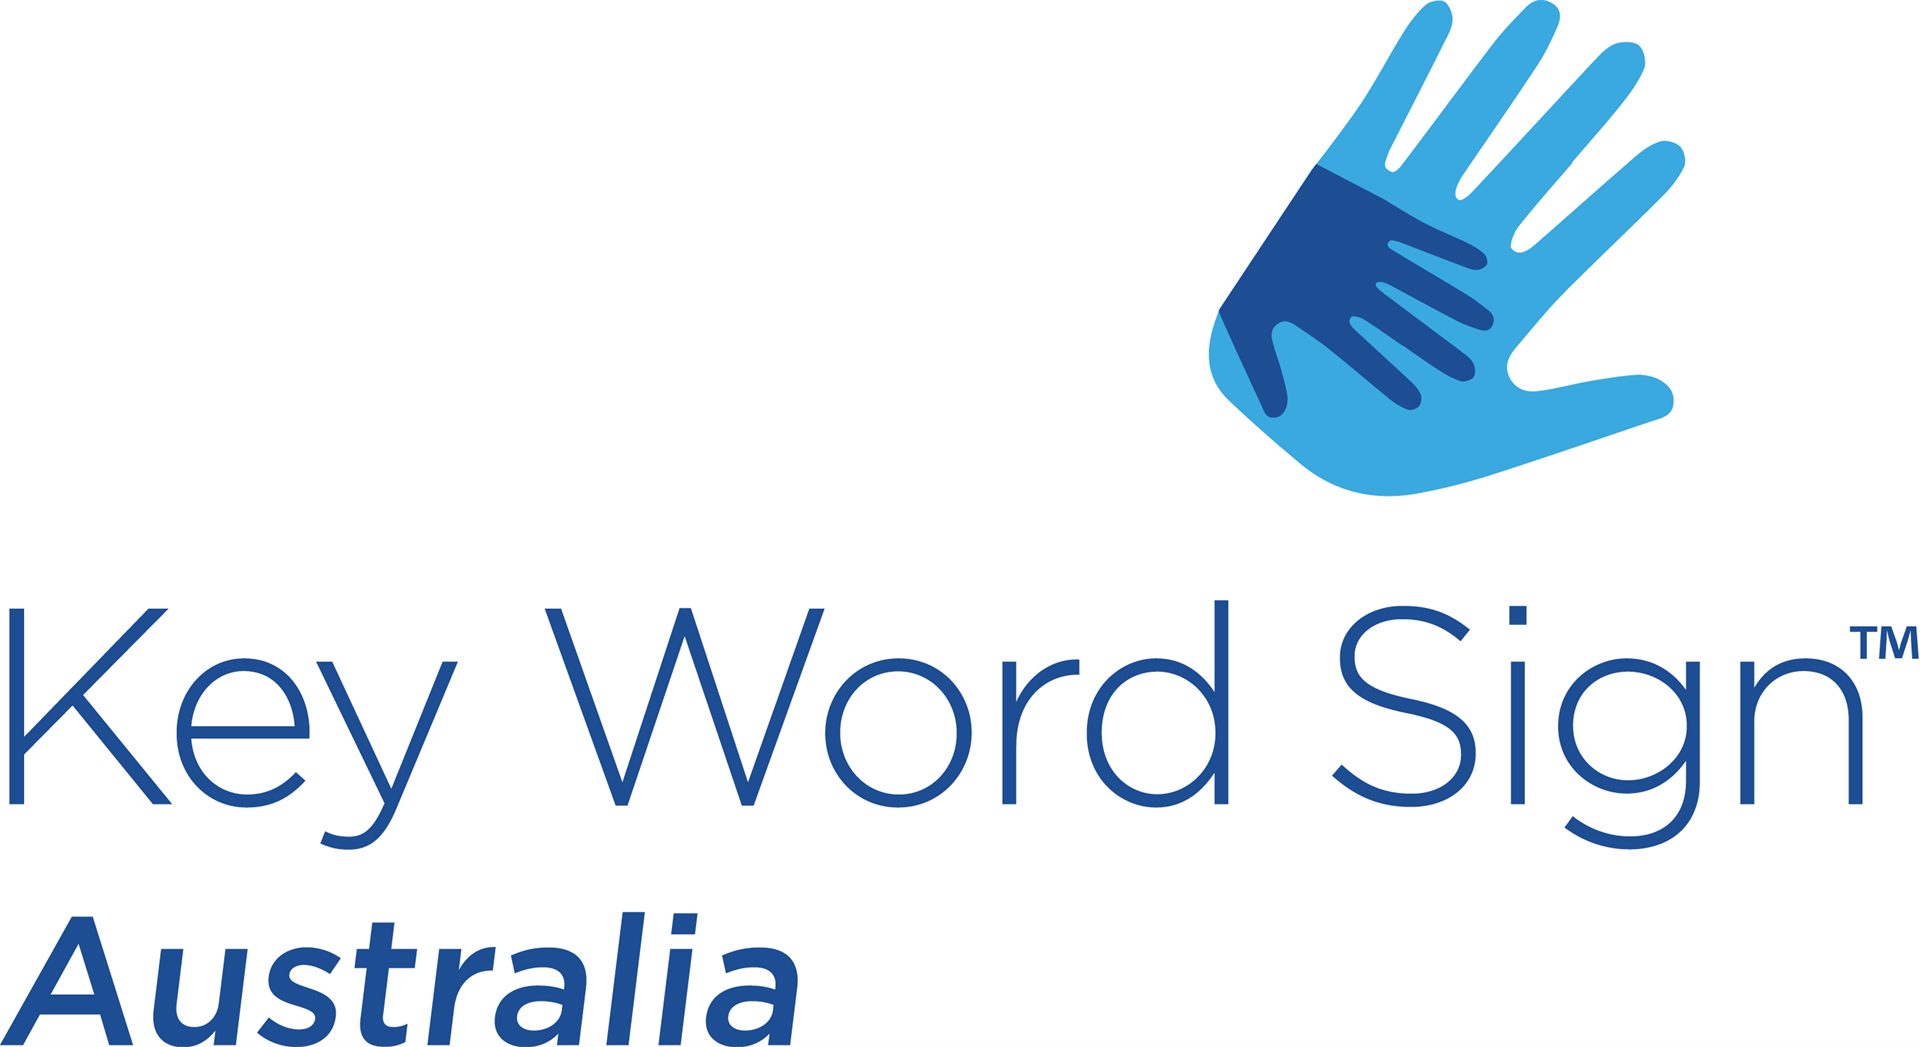 Key word sign Australia